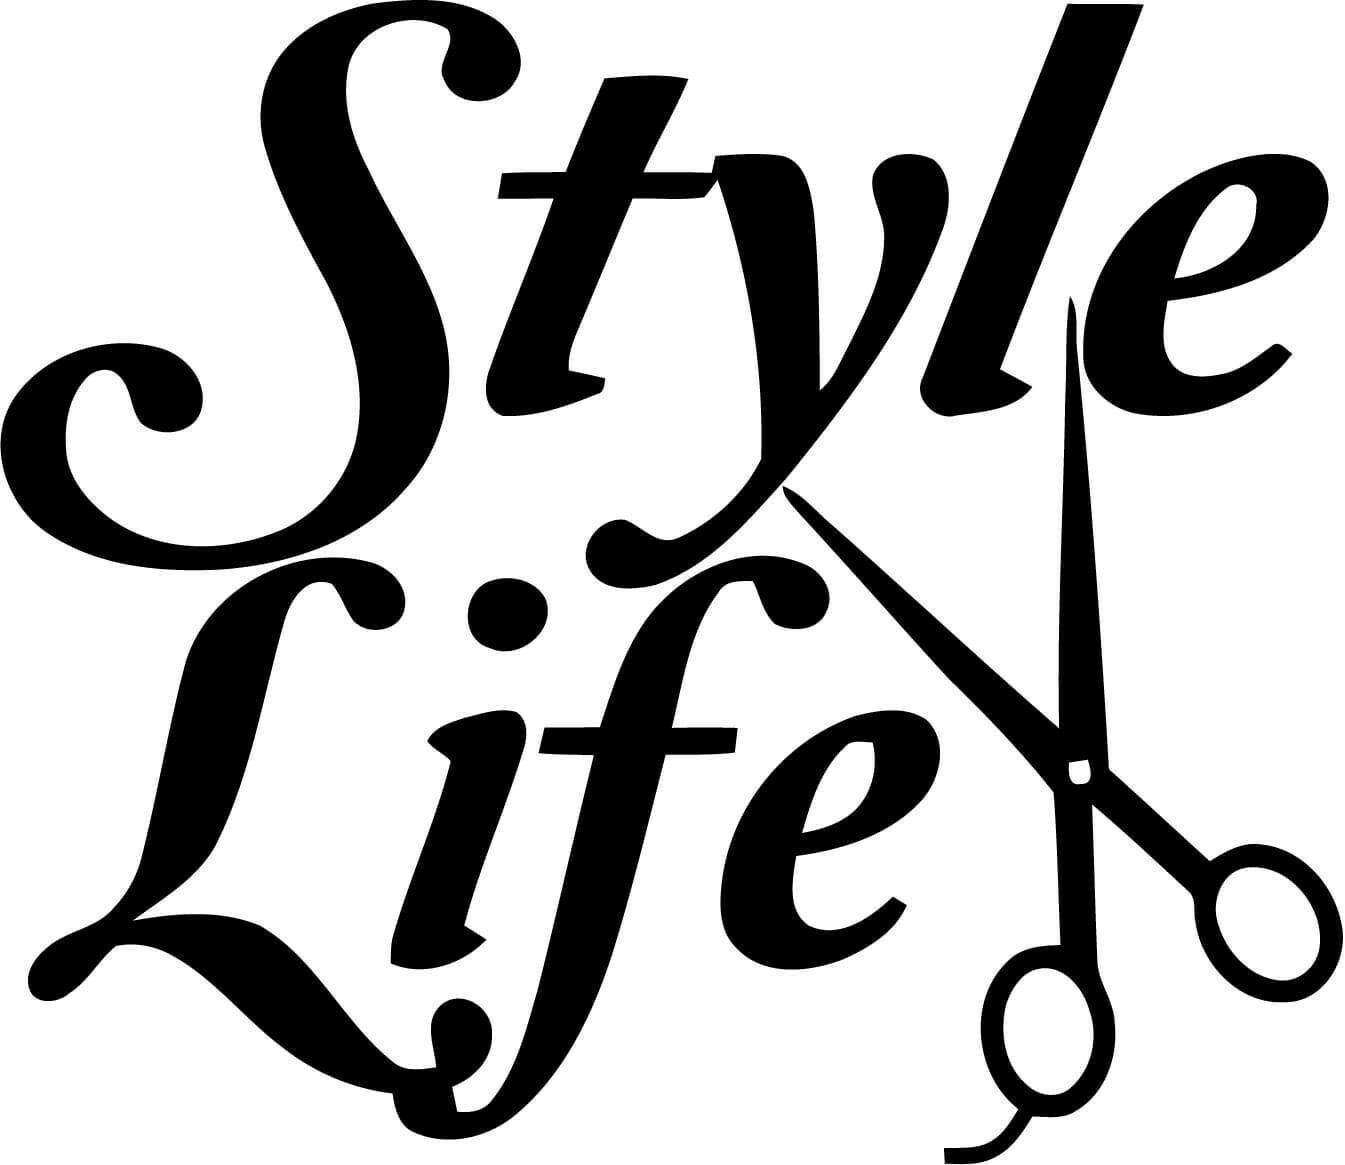 Style Life with Scissors Stylist Vinyl Car Window Laptop Decal Sticker